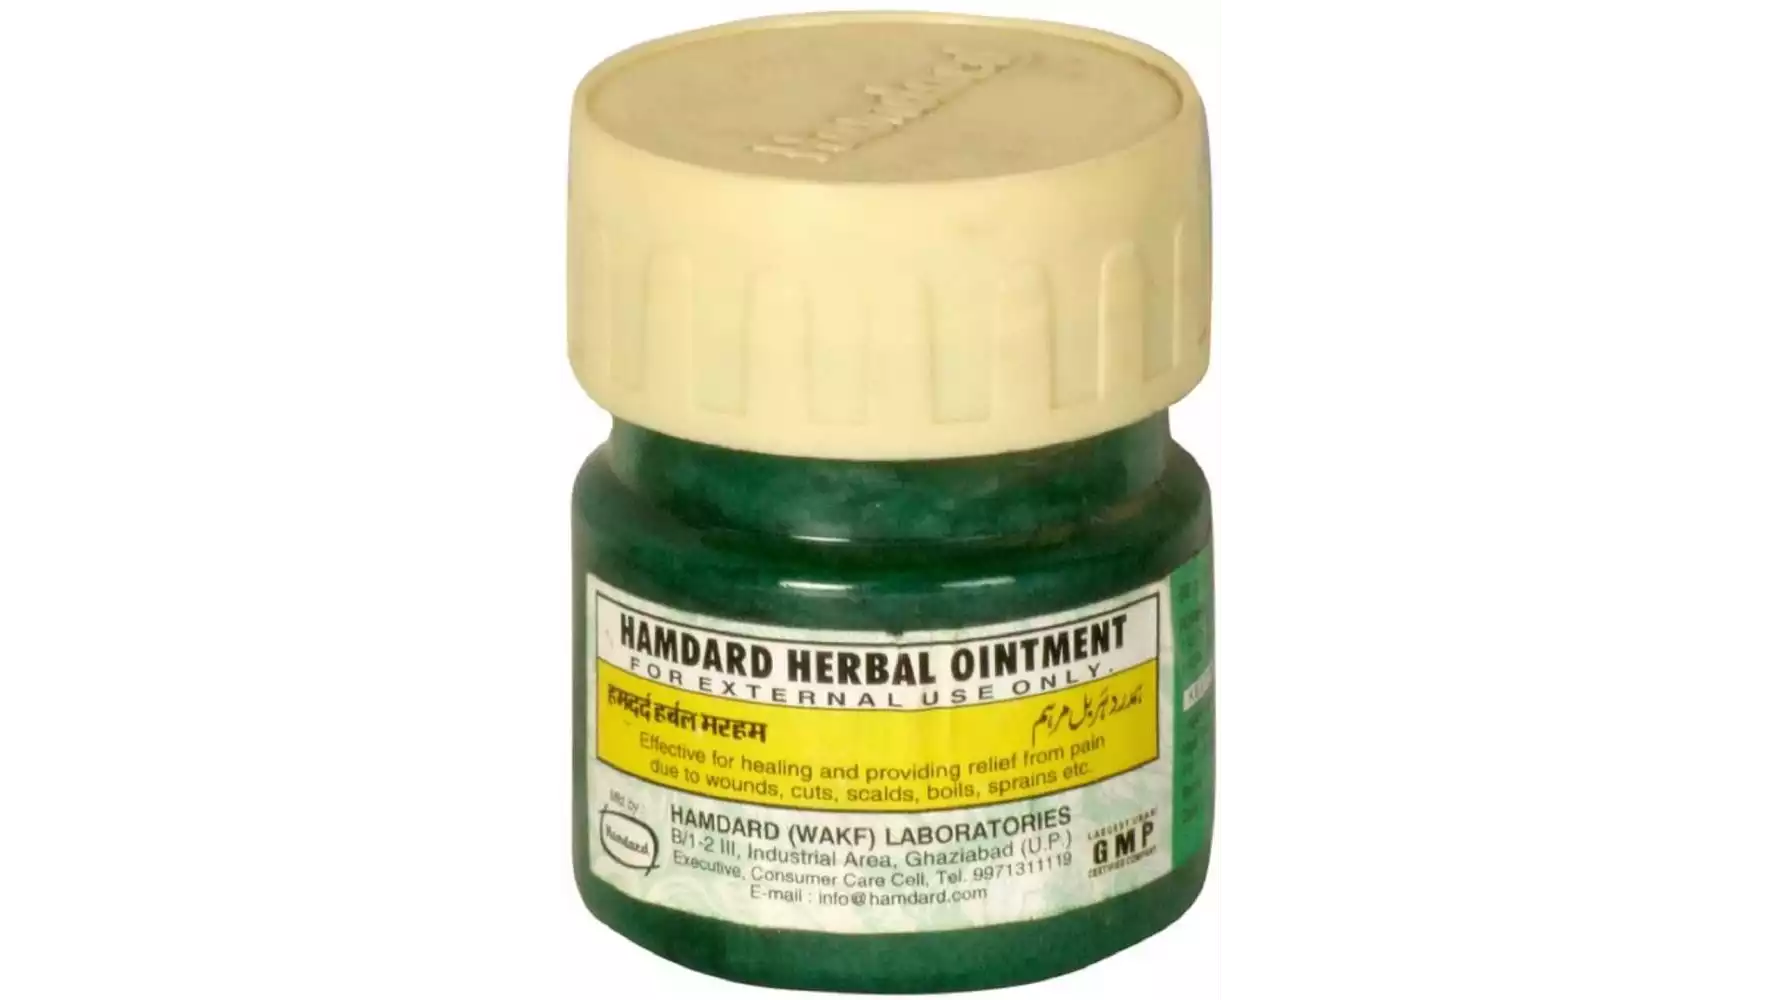 Hamdard Herbal Ointment (25g)